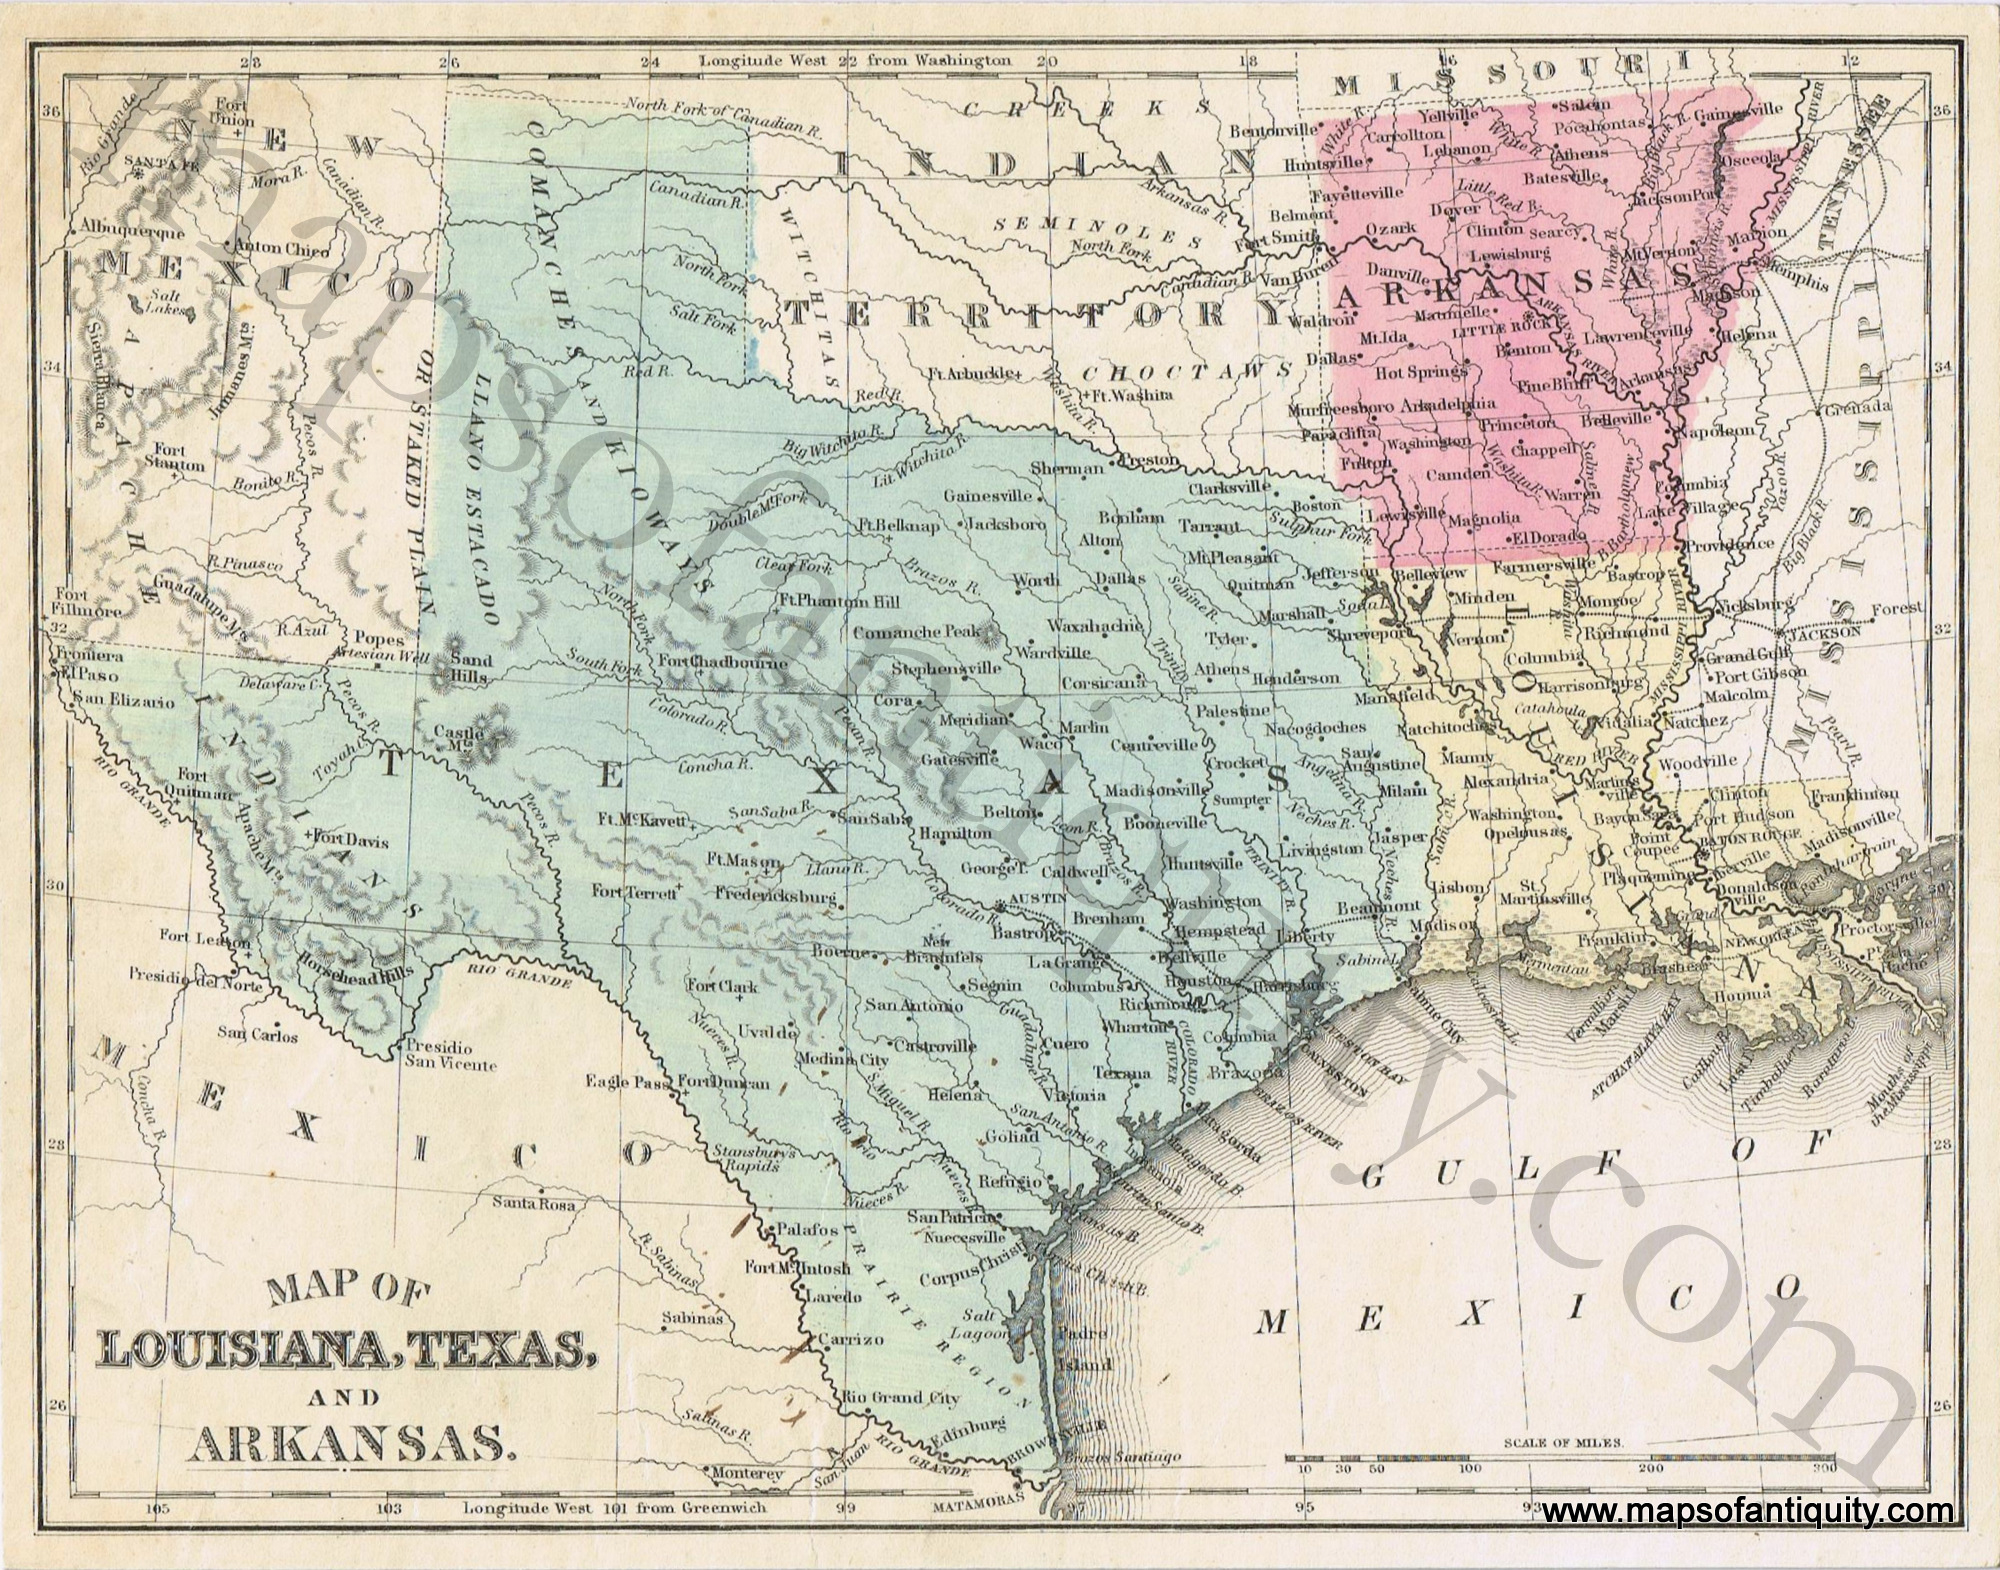 Map Of Louisiana, Texas, And Arkansas *****sold***** - Antique Maps - Map Of Texas And Arkansas